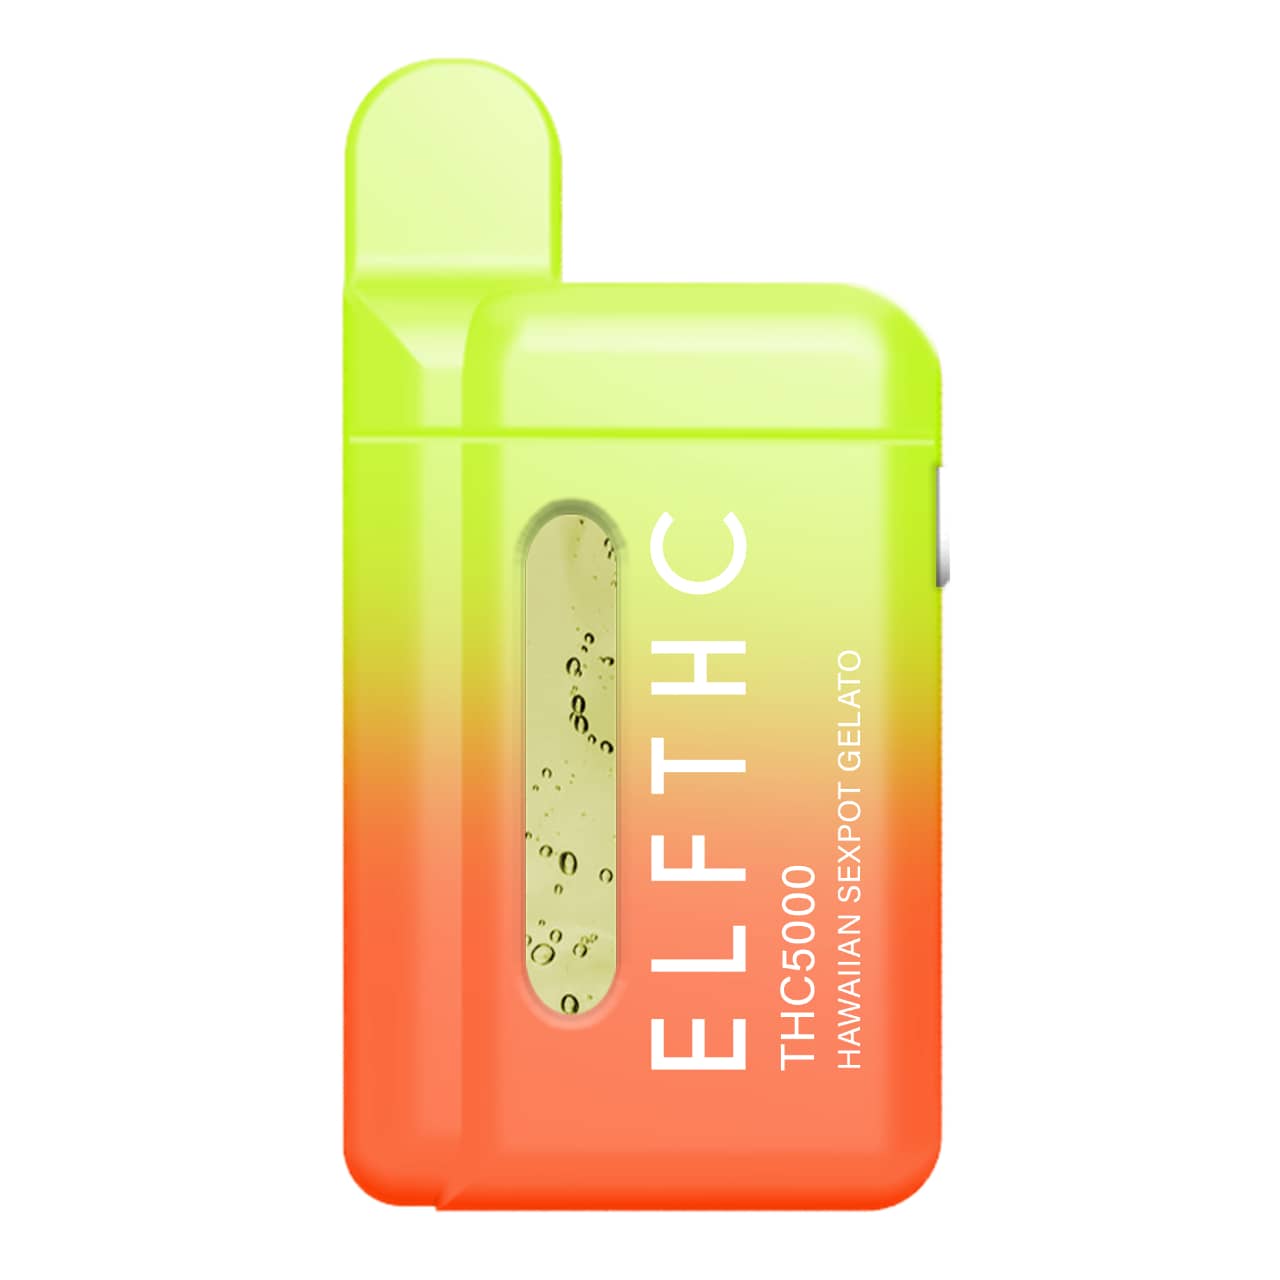 ELF THC - Telerin Blend 5000mg - Disposable Vape Device - Hawaiin Sexpot Gelato Flavored